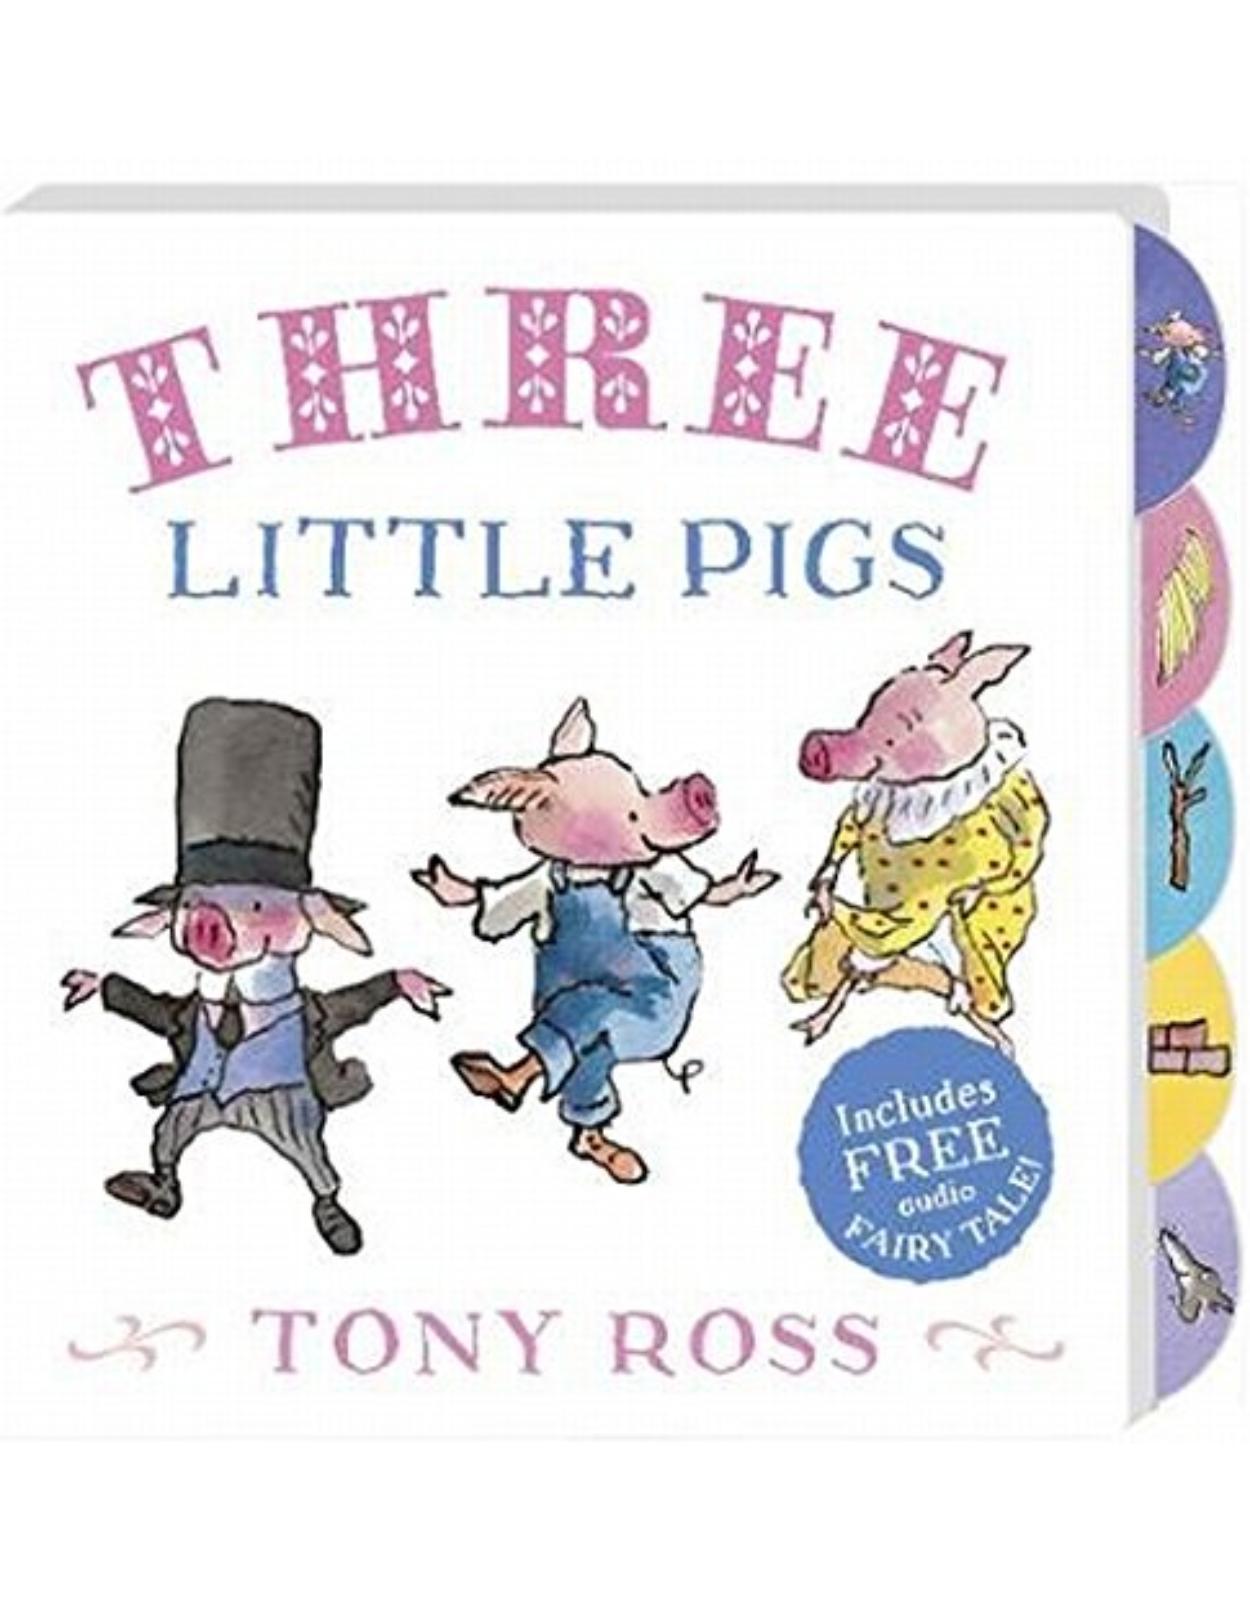 My Favourite Fairy Tale Board Book: Three Little Pigs